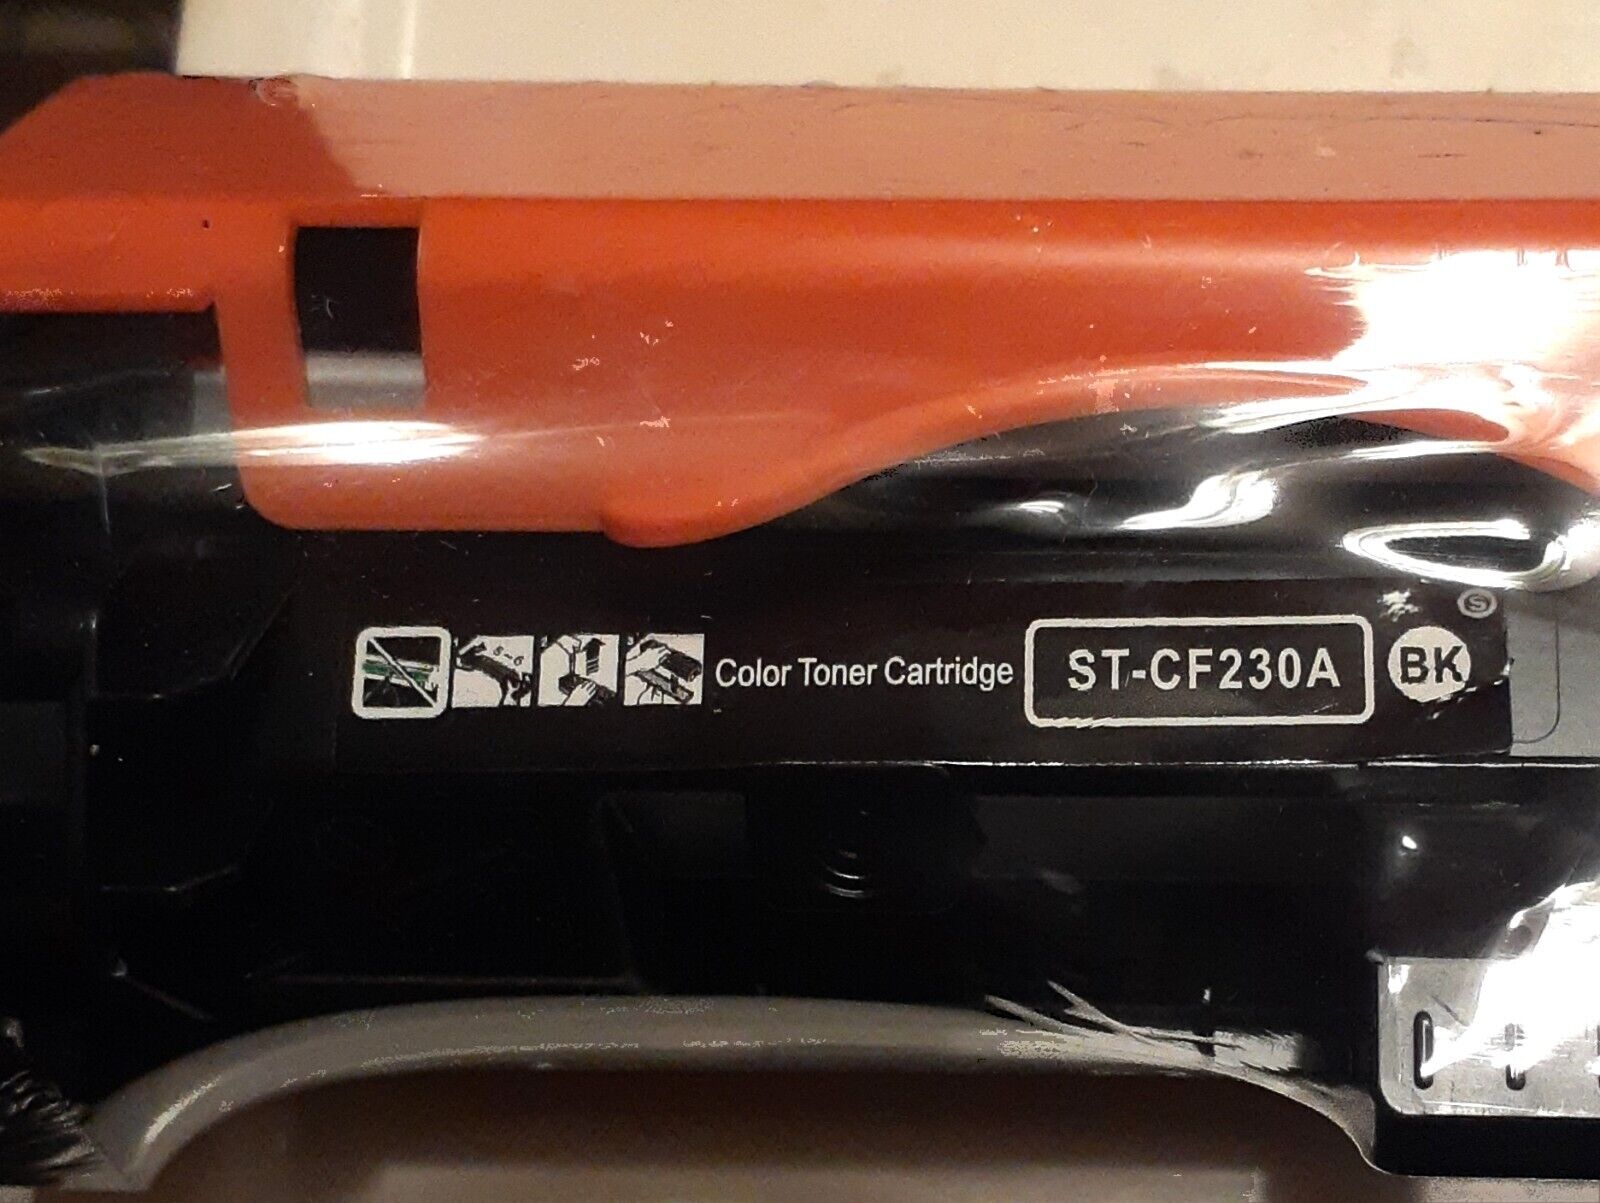 1-Pack of Toner Cartridge CF230A 30A for M203dw M203dn MFP M227sdn Printer